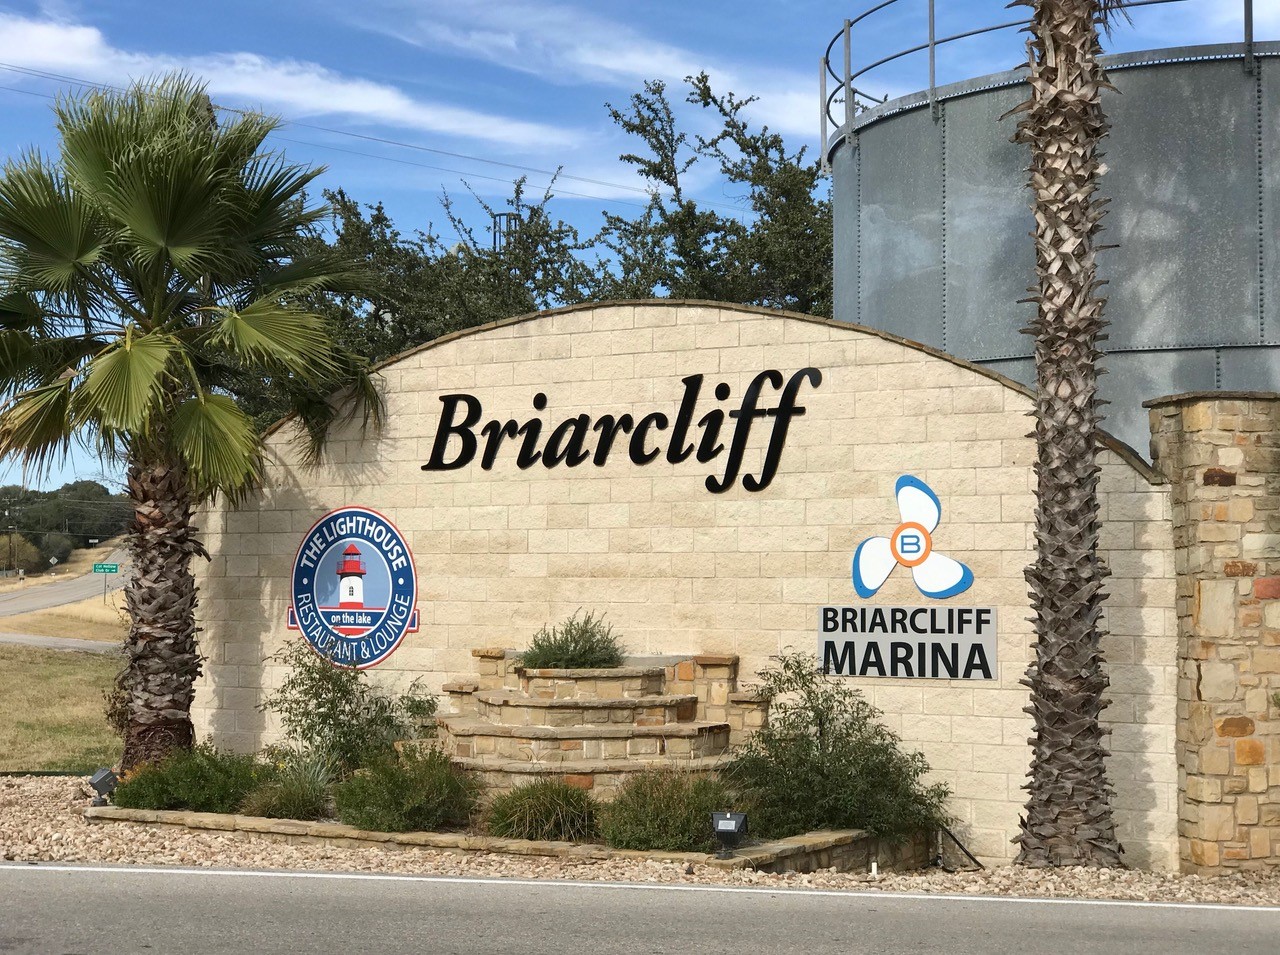 Main entrance to Briarcliff Marina